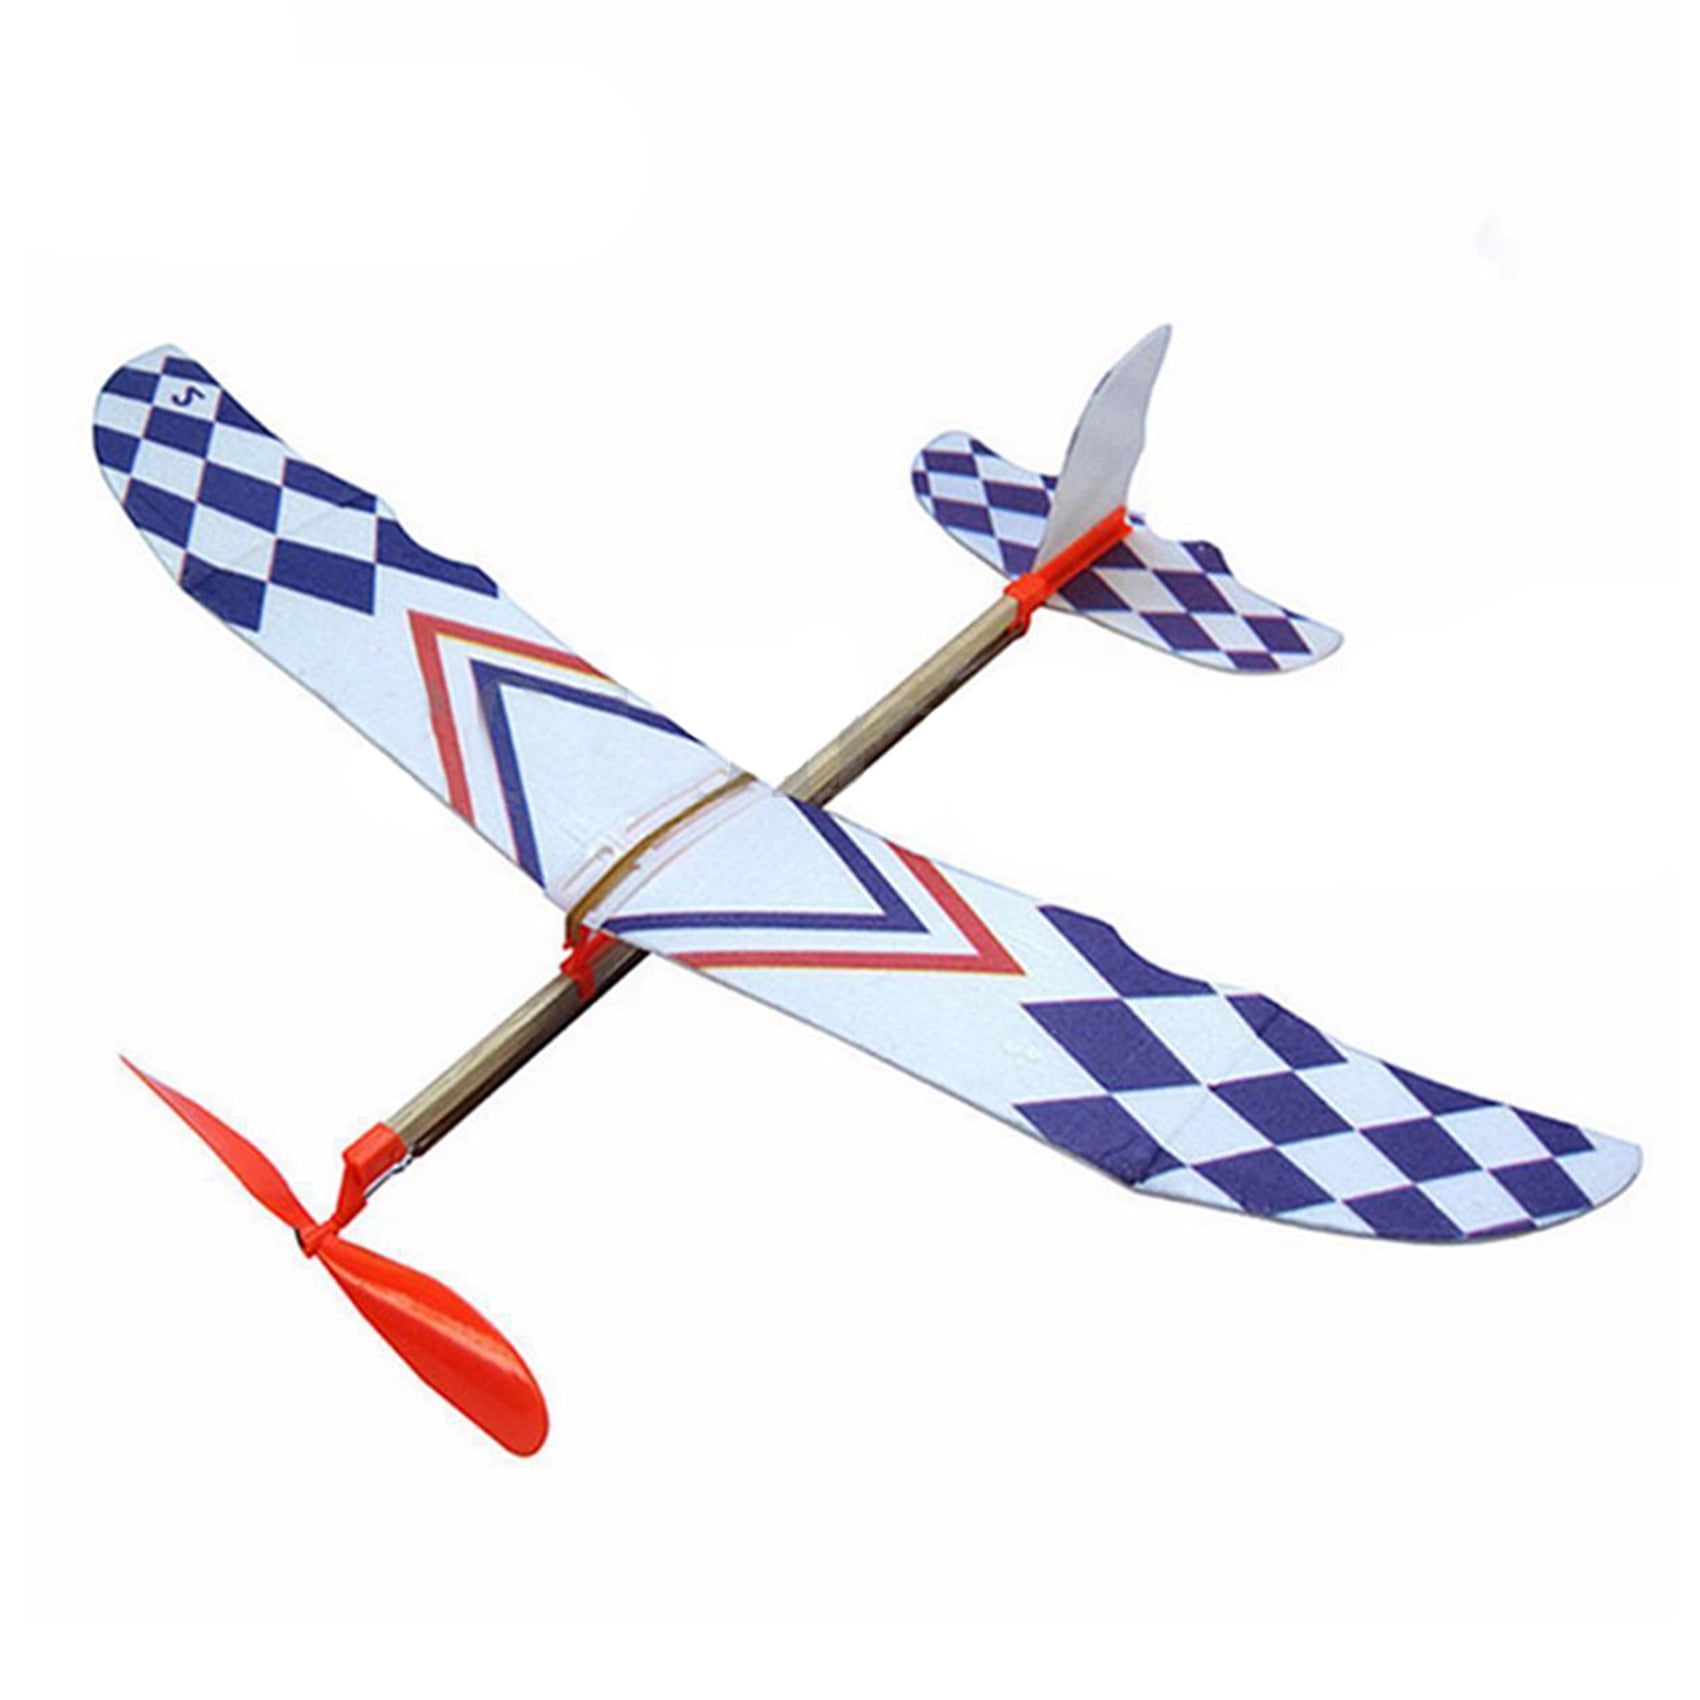 2x Windup Spinning Planes Aeroplane Model Mechanical Clockwork Toys Room Decor 